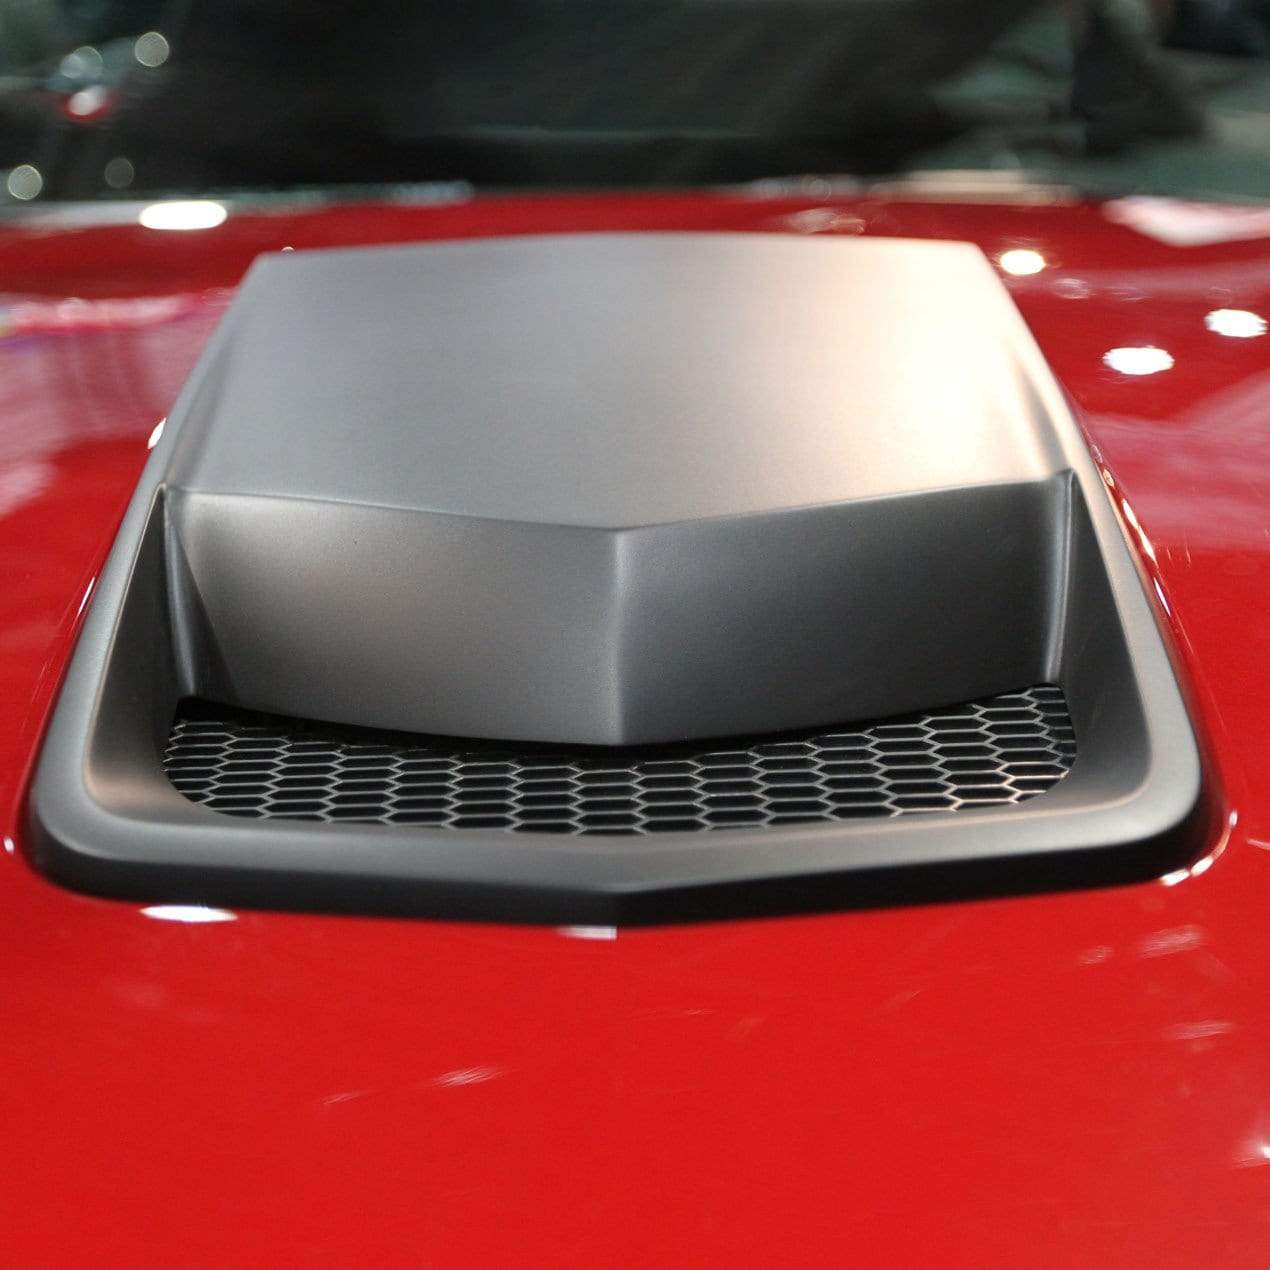 ACS Composite TLE Hood Insert in Satin Black [46-4-011]SBK for 2014-2015 Camaro SS - Enhance heat extraction and aerodynamics.